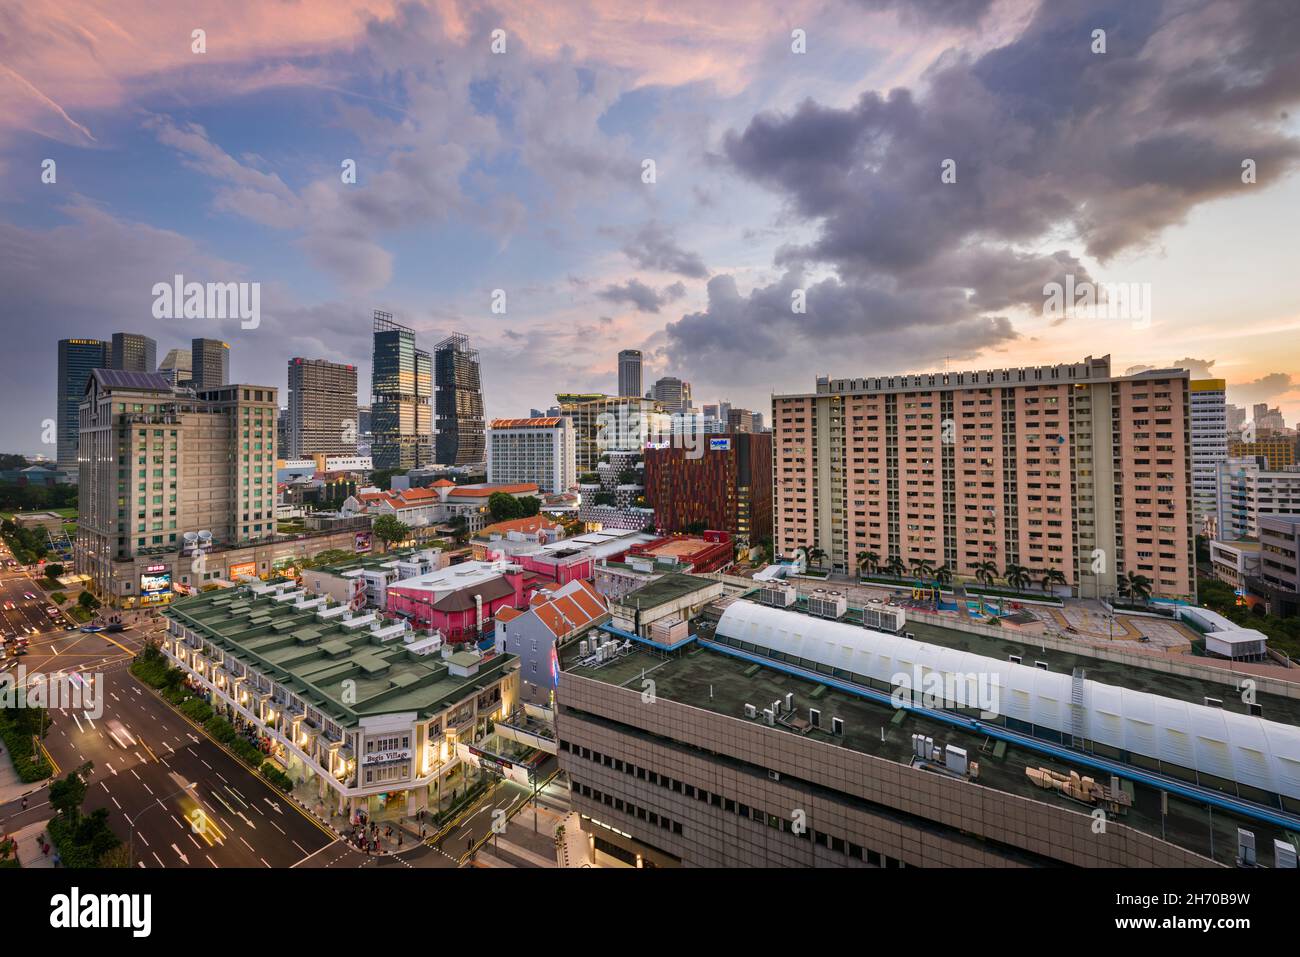 Singapore, 30 Dec 2015: Beautiful sunset of Bugis downtown area taken from Rochor Centre. Stock Photo